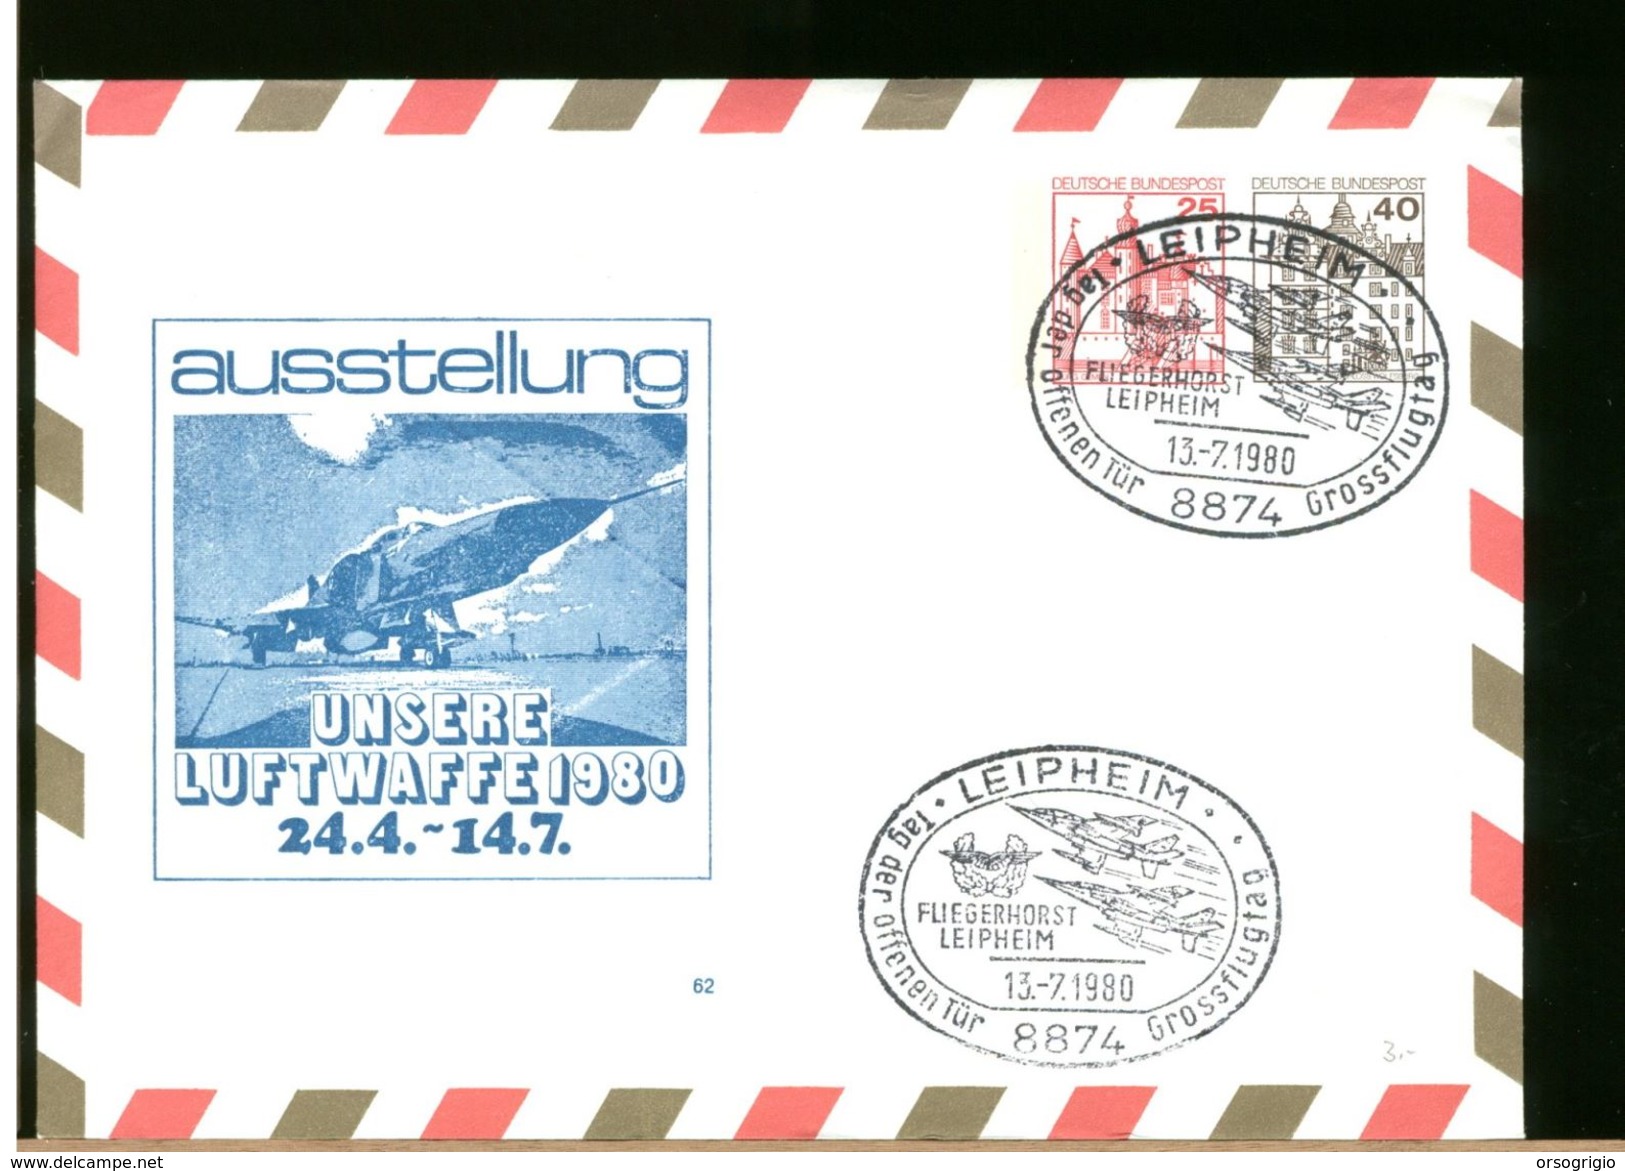 GERMANY - BUNDESWEHR - LEIPHEIM - FLIEGERHORST - LUFTWAFFE - Private Covers - Mint